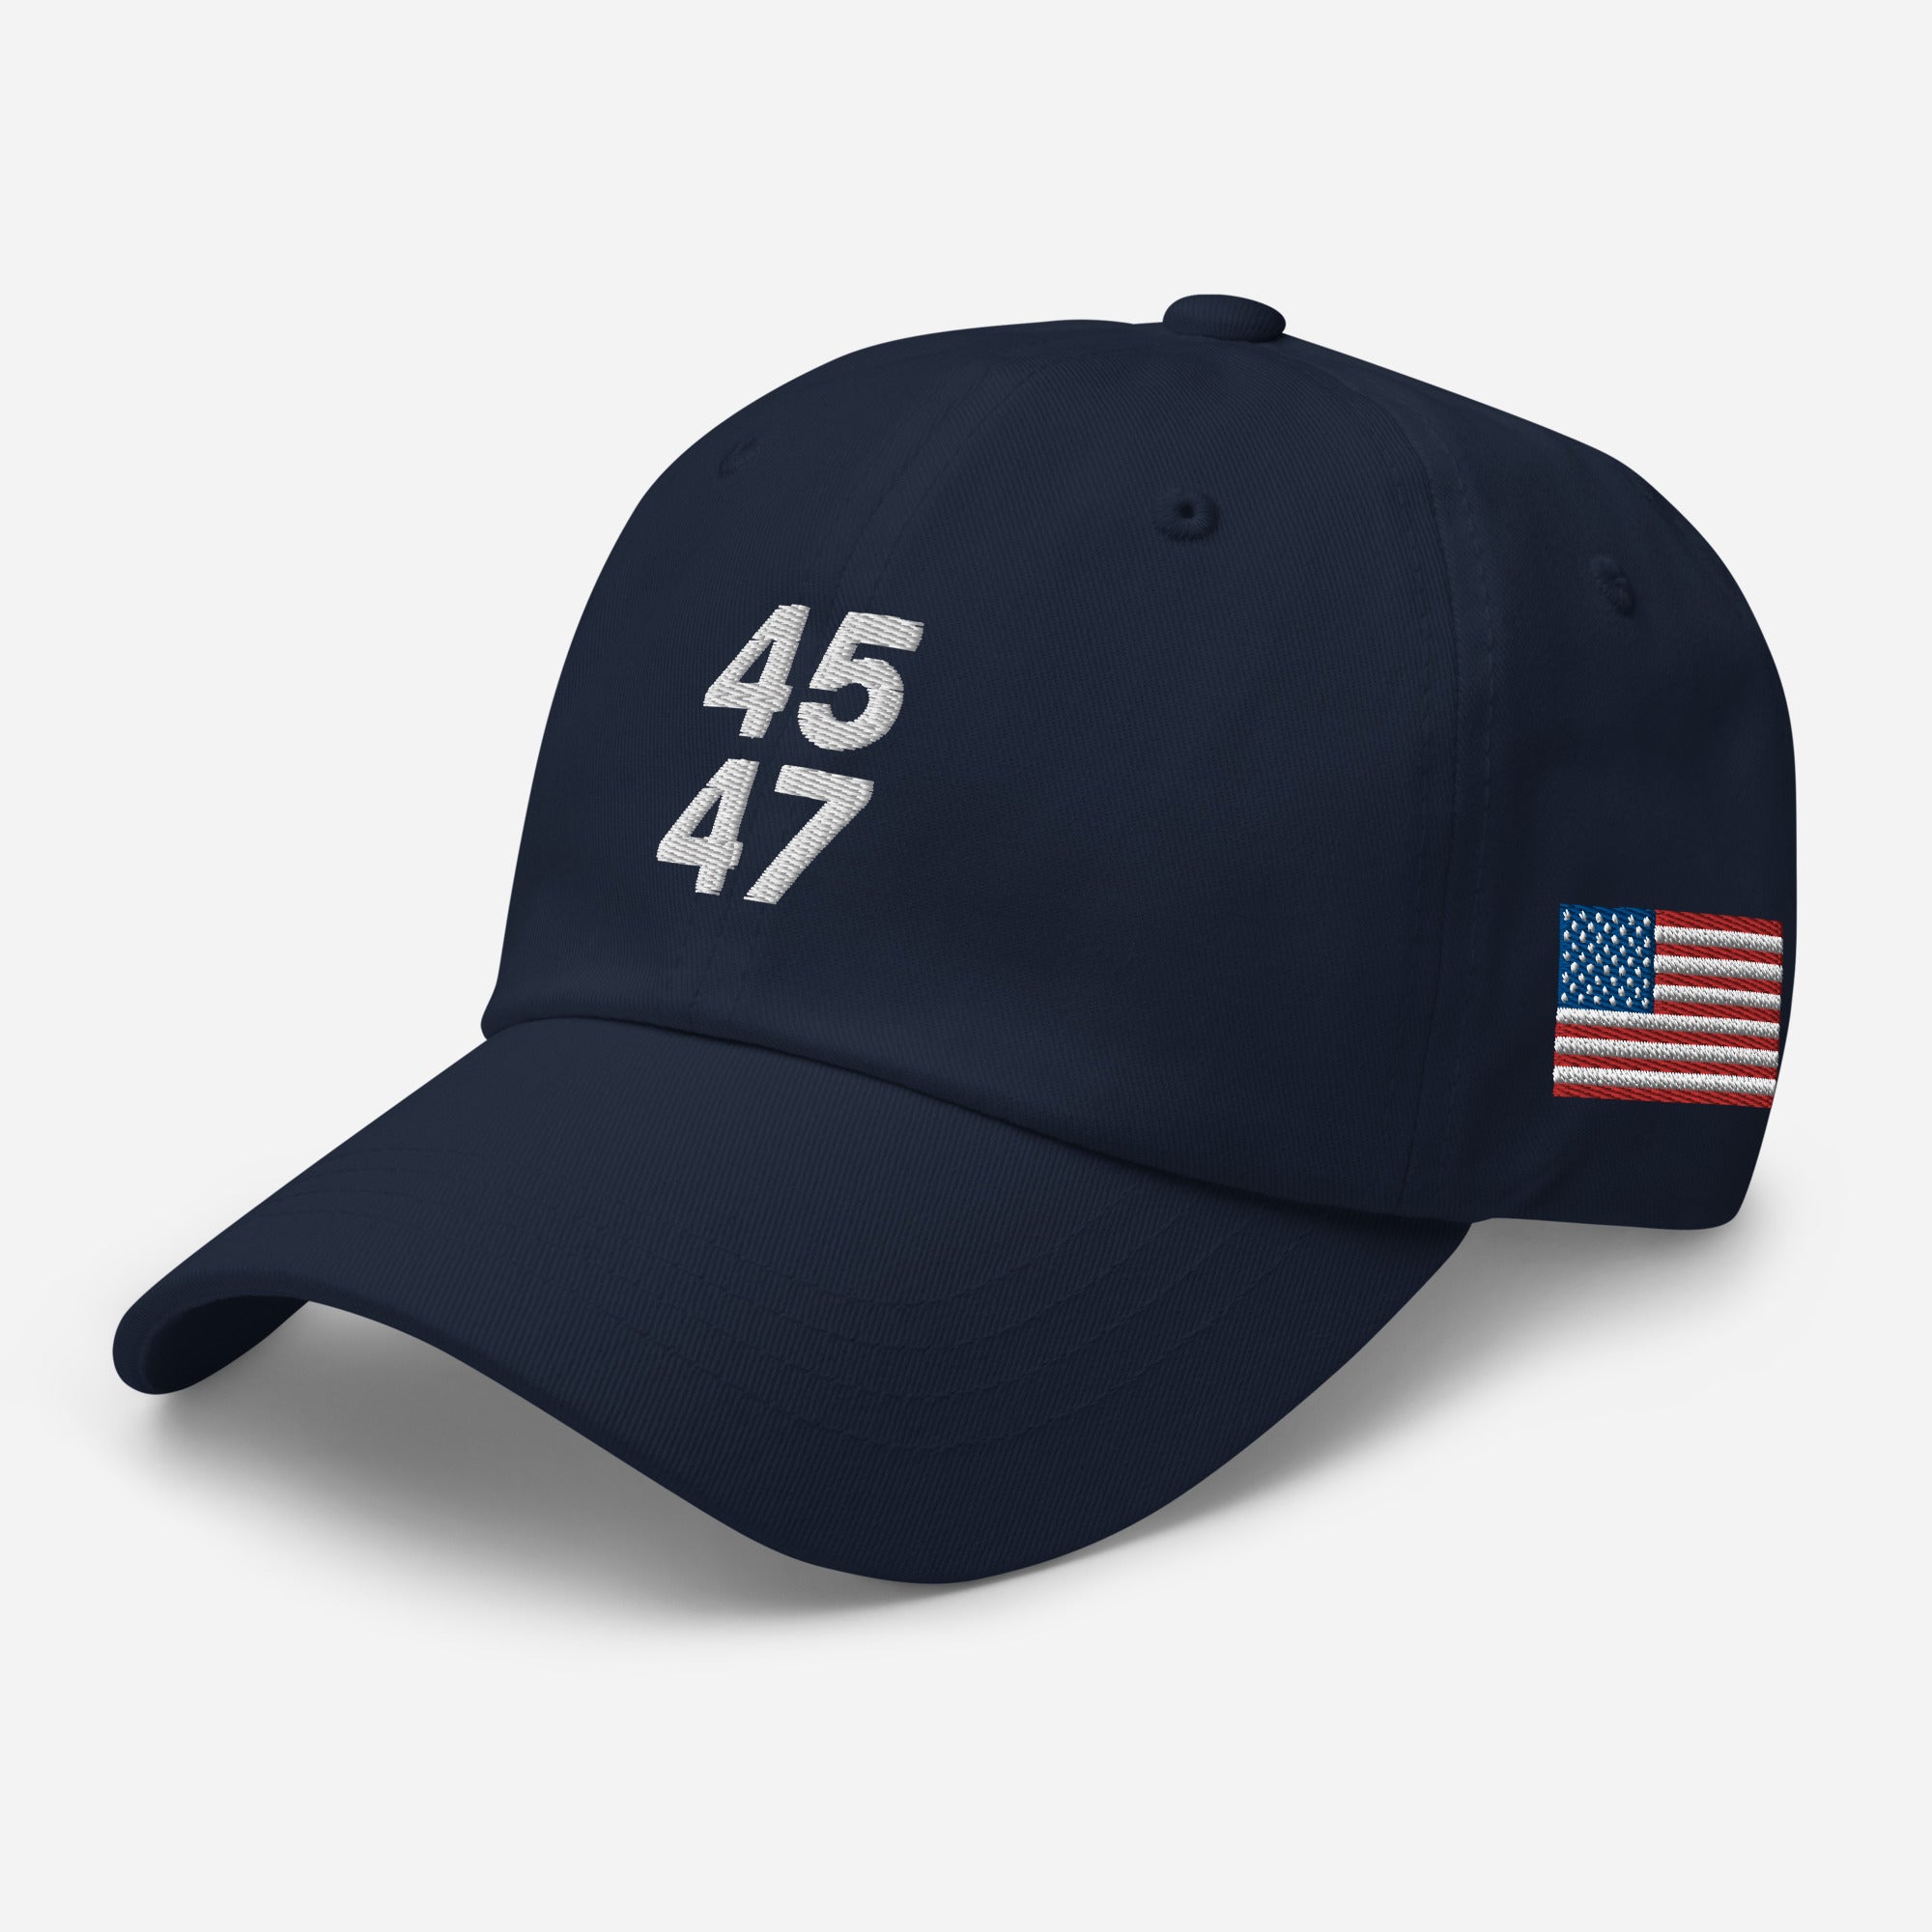 45 47 dad hat, 45 47 baseball cap, 45 47 trump hat, 45 Trump hat, Donald Trump 2024, 45 dad cap, Republican Gifts, 45 47 conservative gifts - Madeinsea©